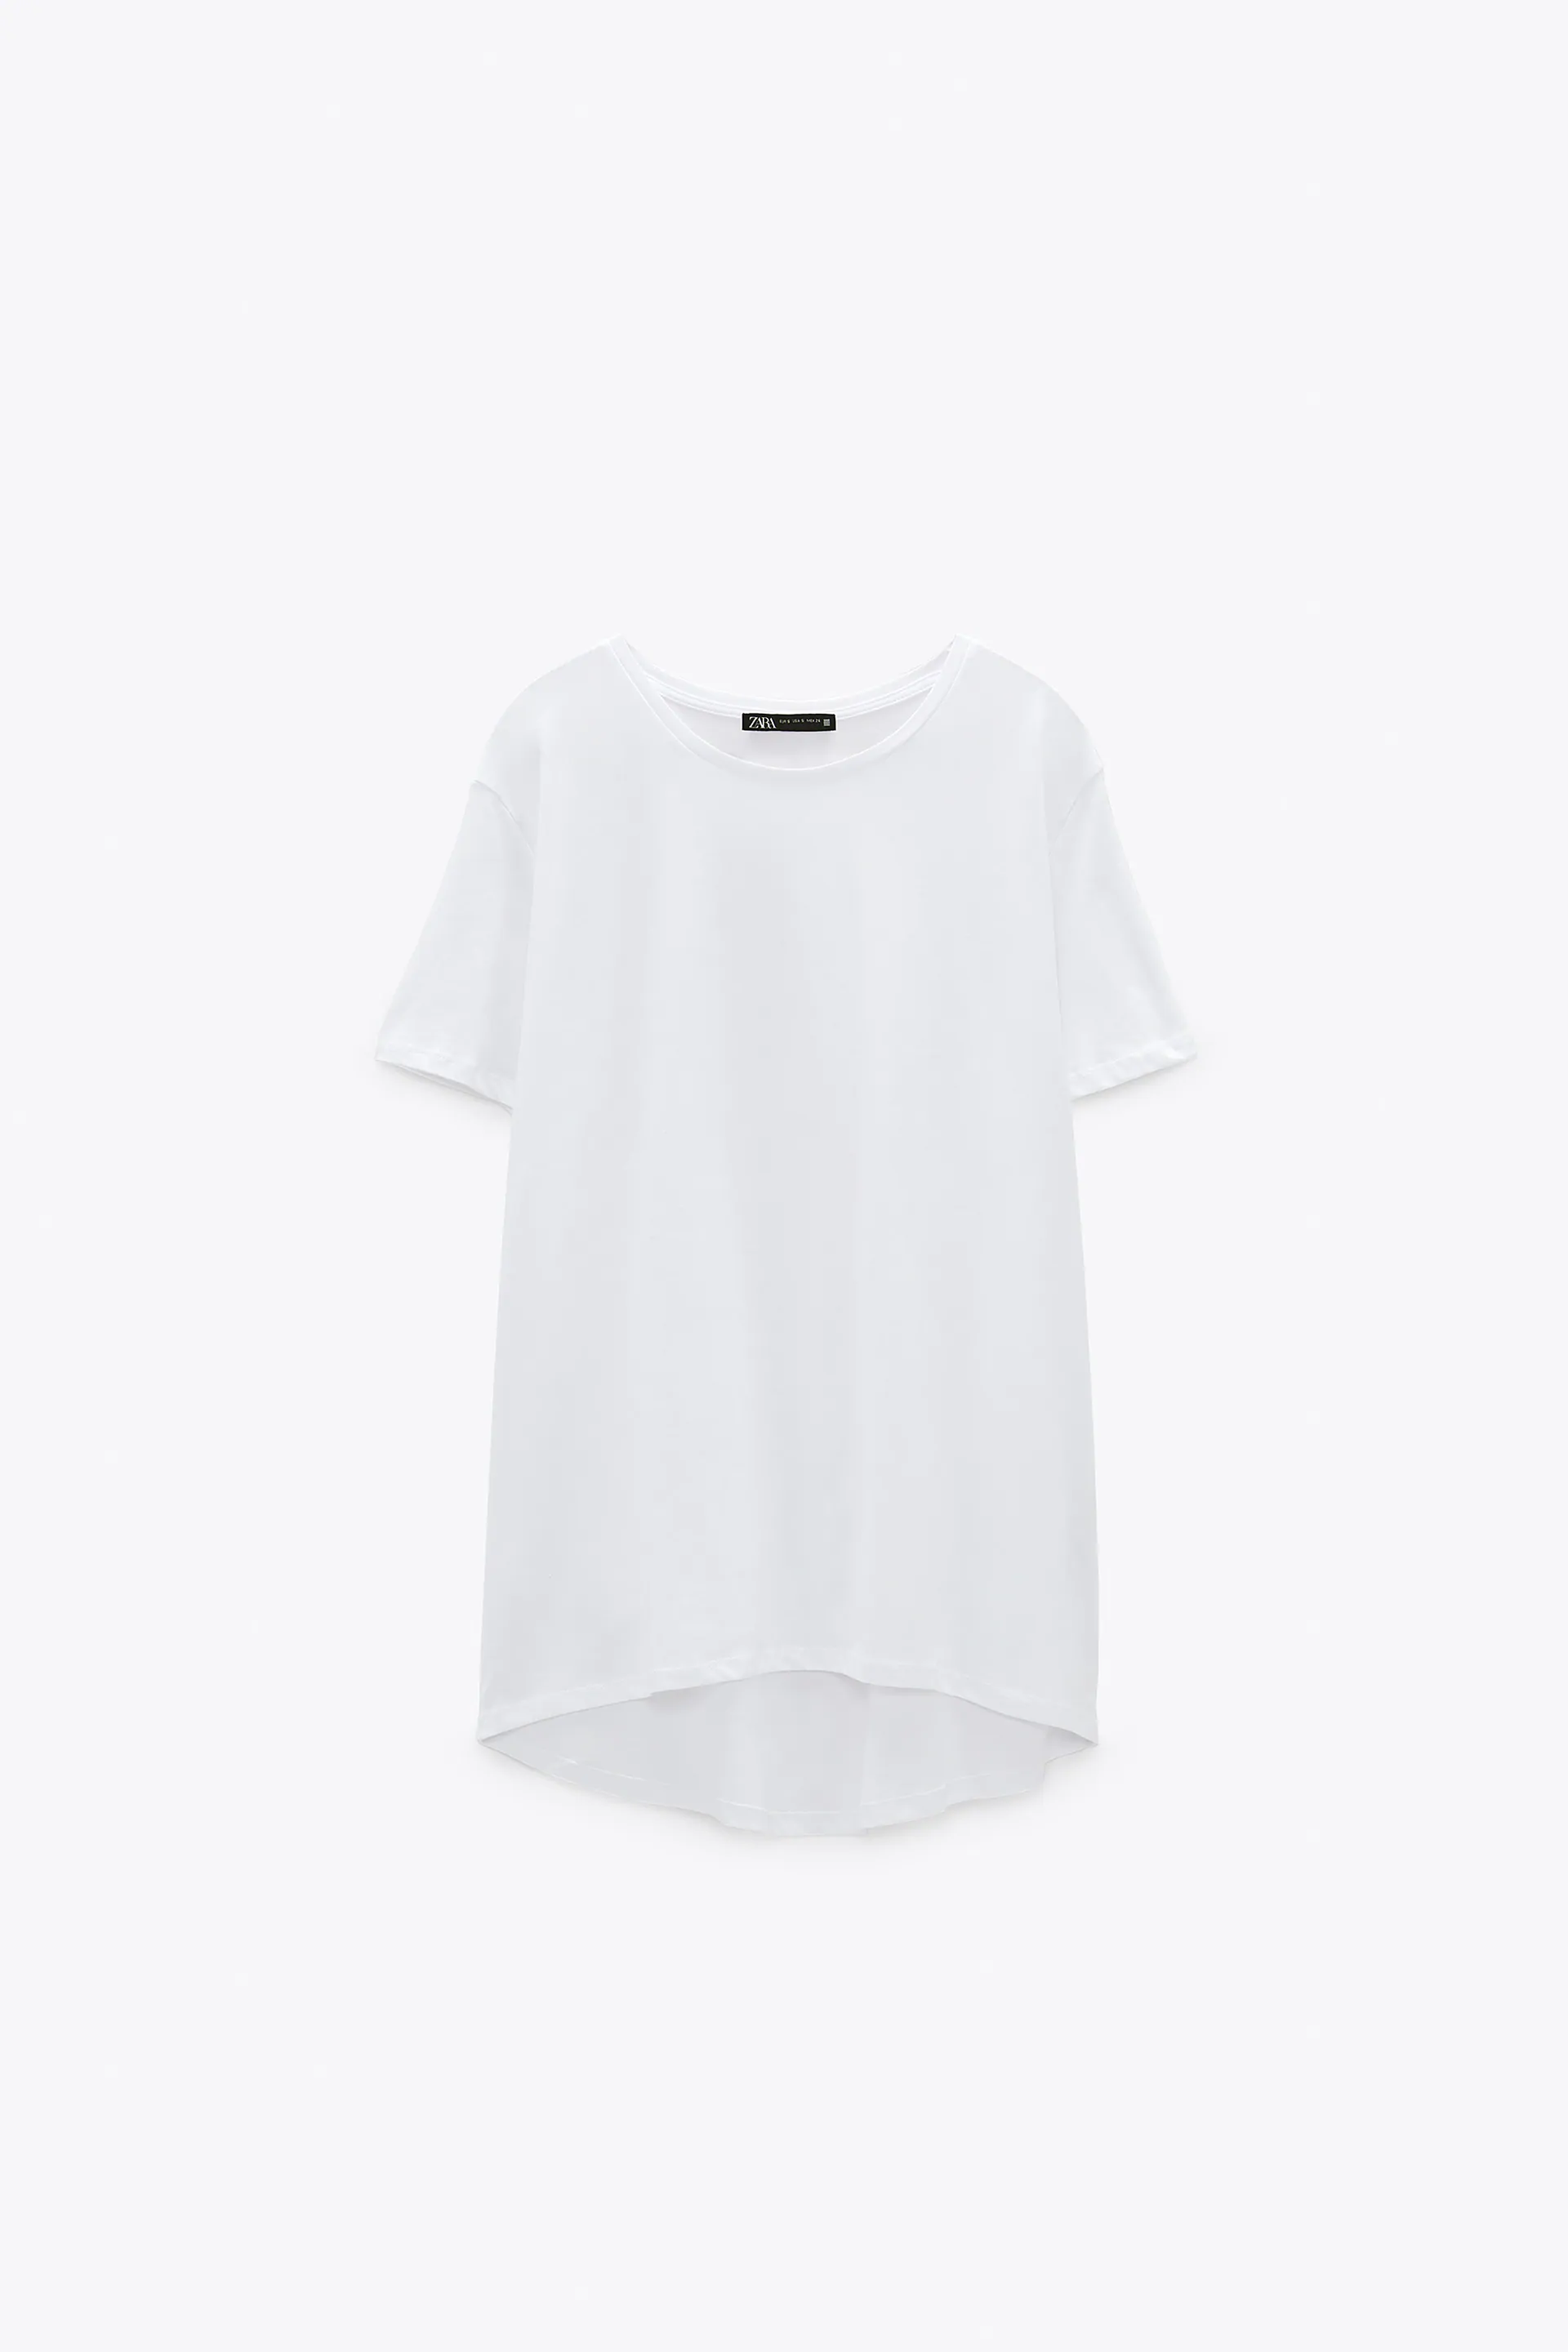 tricou alb zara [1]